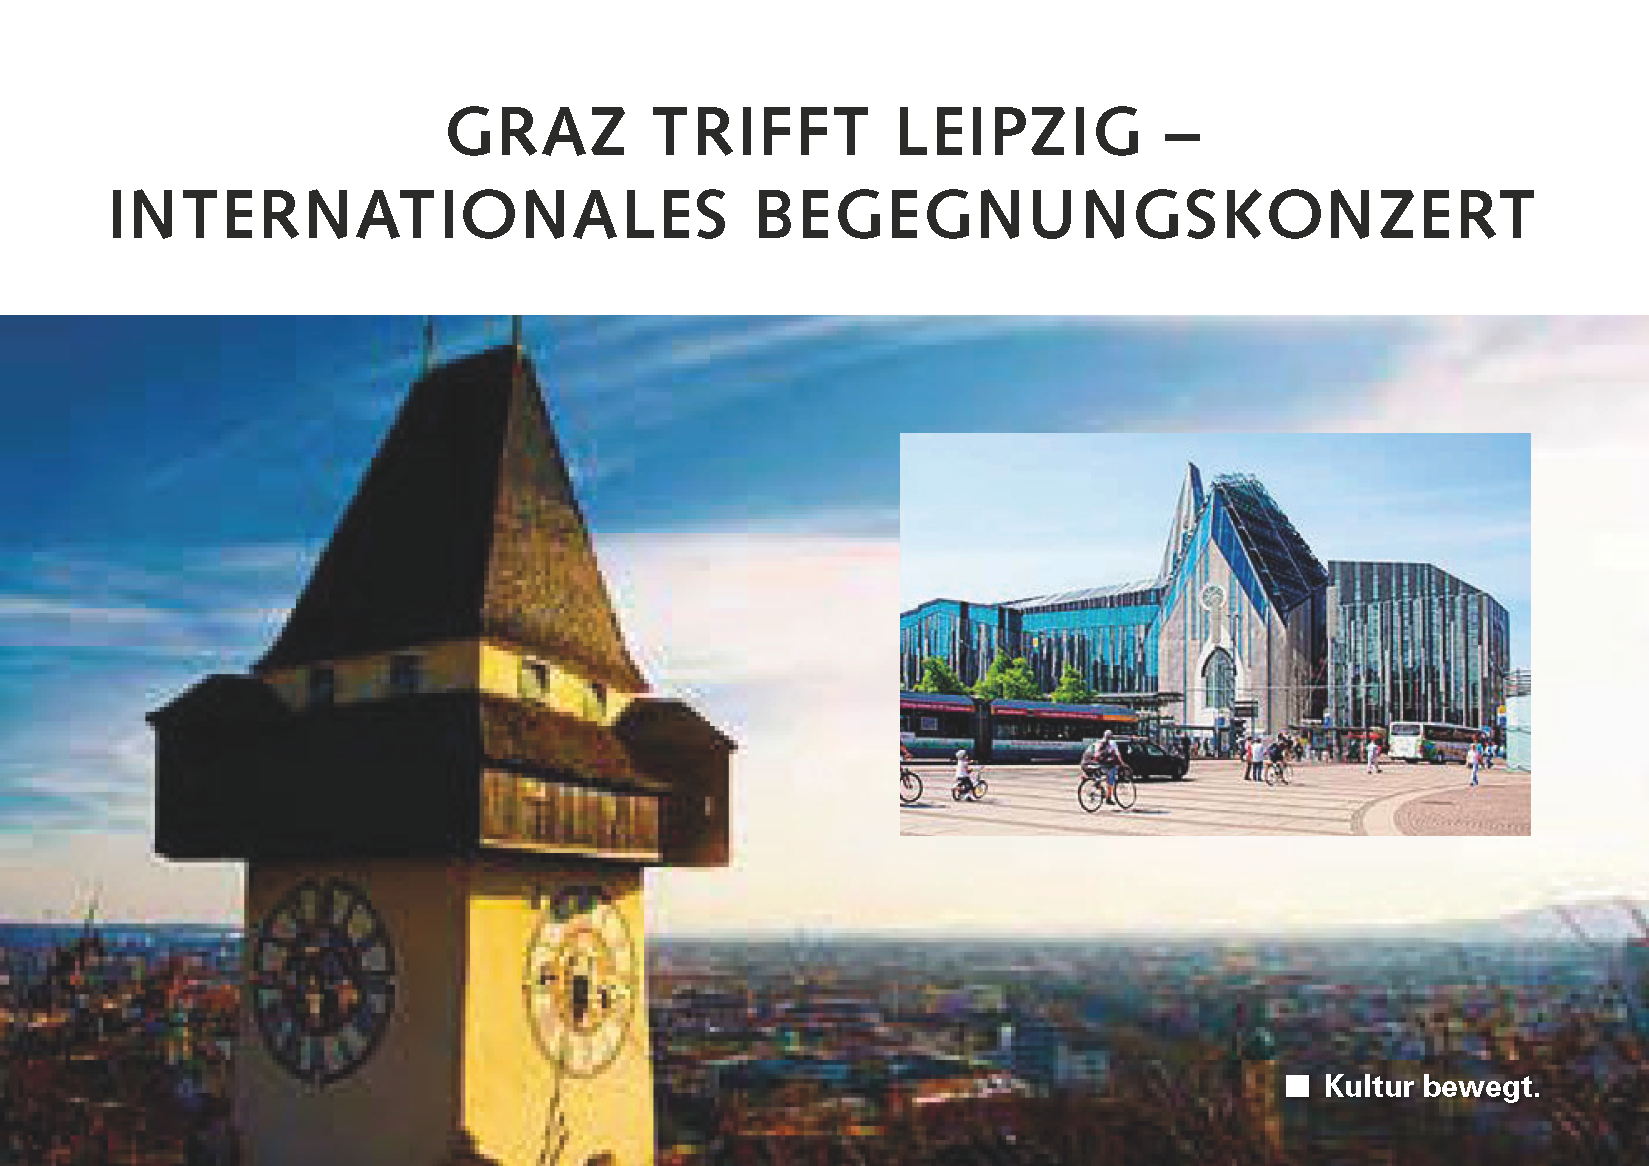 Graz trifft Leipzig